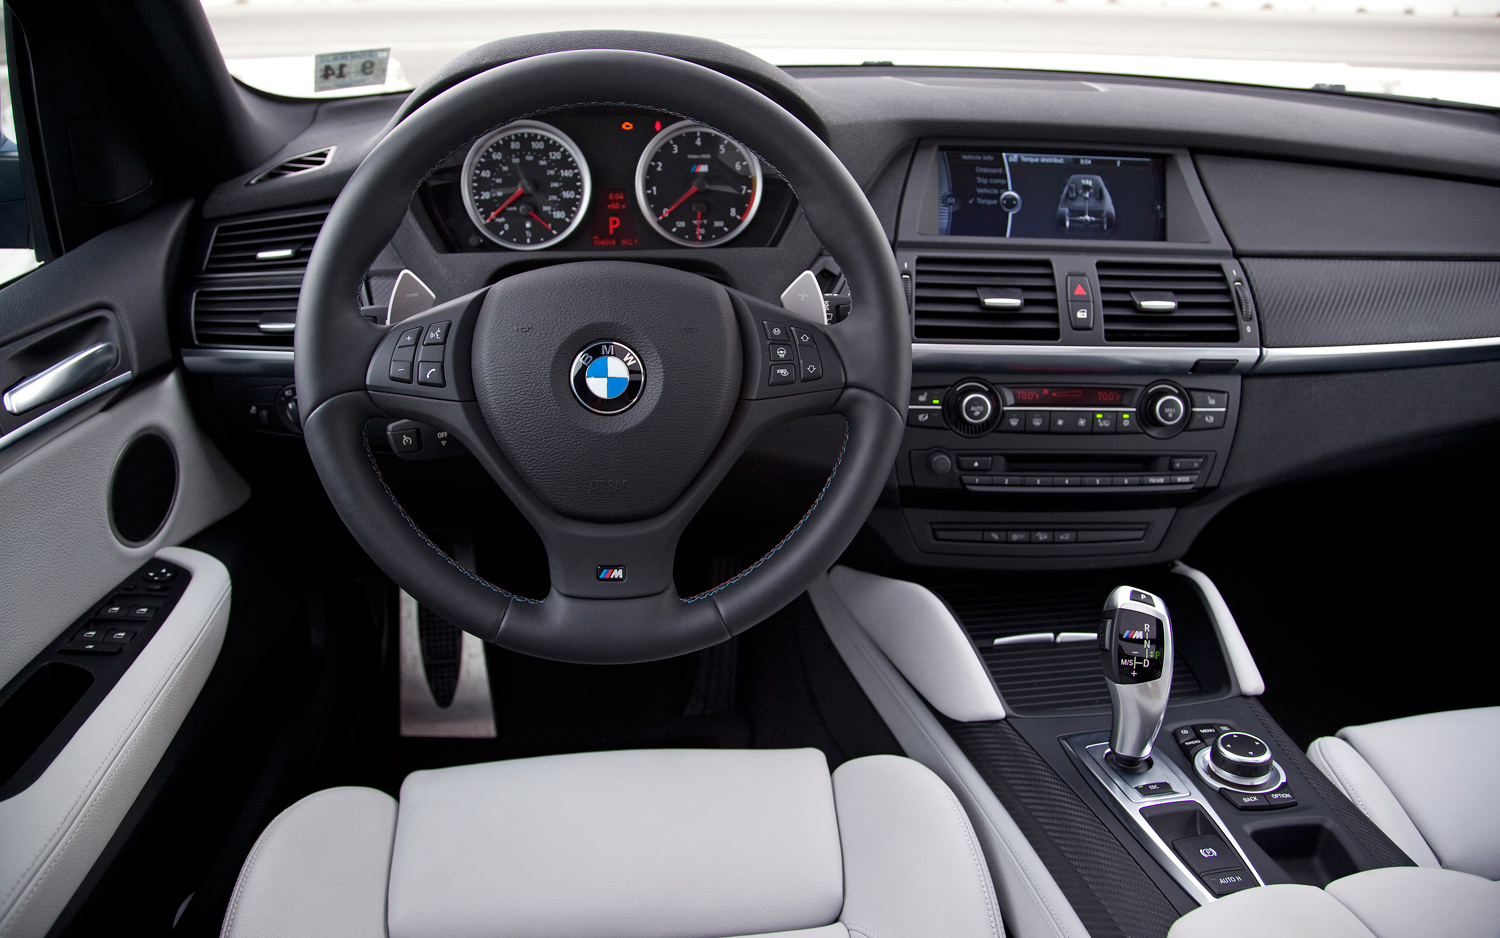 Bmw x5 комплектации. BMW x5 e70 Interior. БМВ х5 е70 салон. BMW x5 e70 салон. BMW x5 2008 салон.